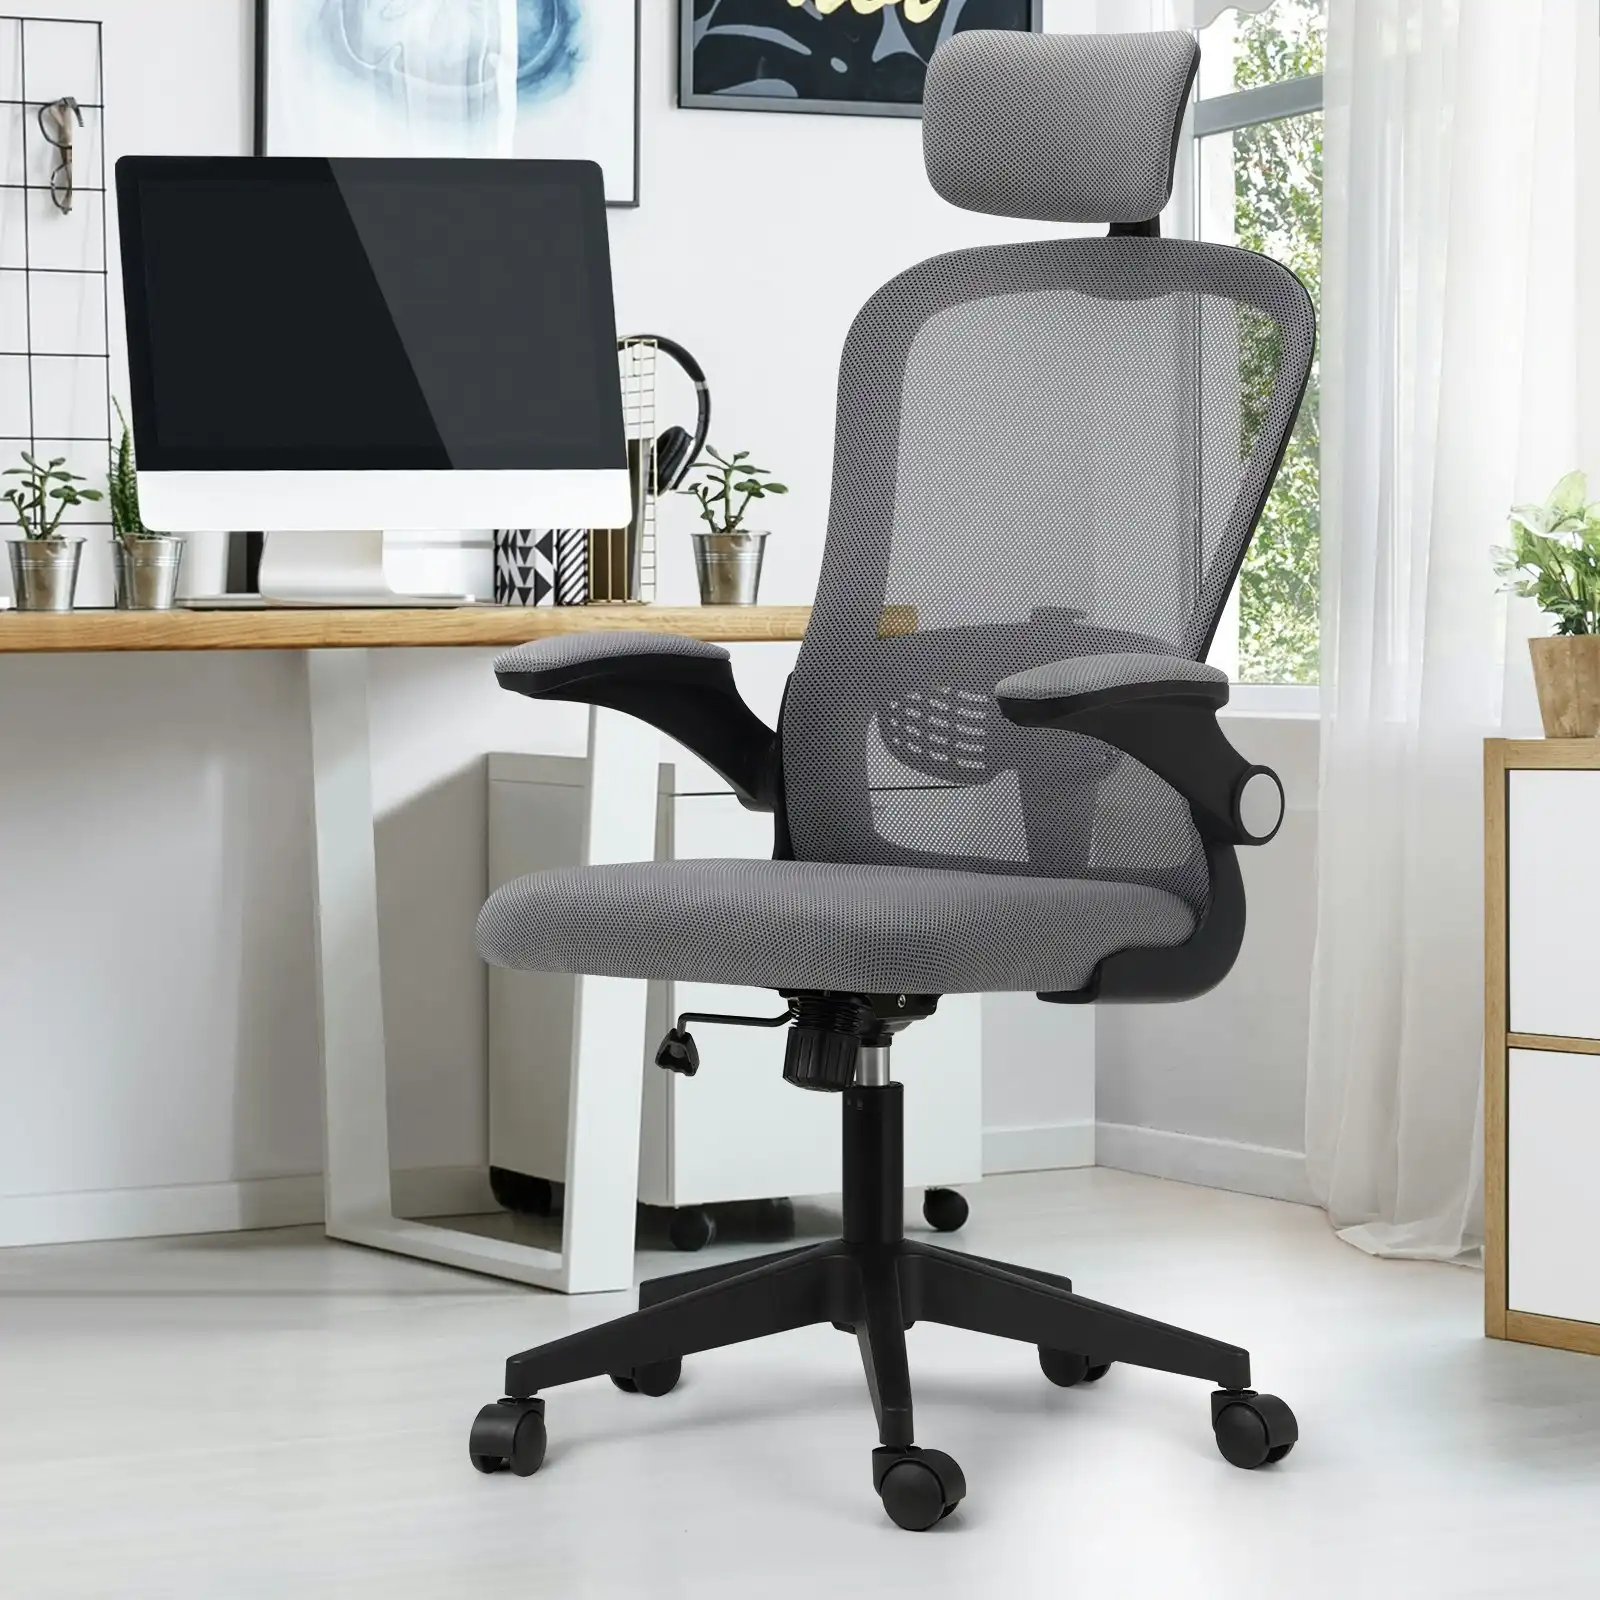 Oikiture Mesh Office Chair Executive Gaming Seat Racing Tilt Computer BLACK&GREY